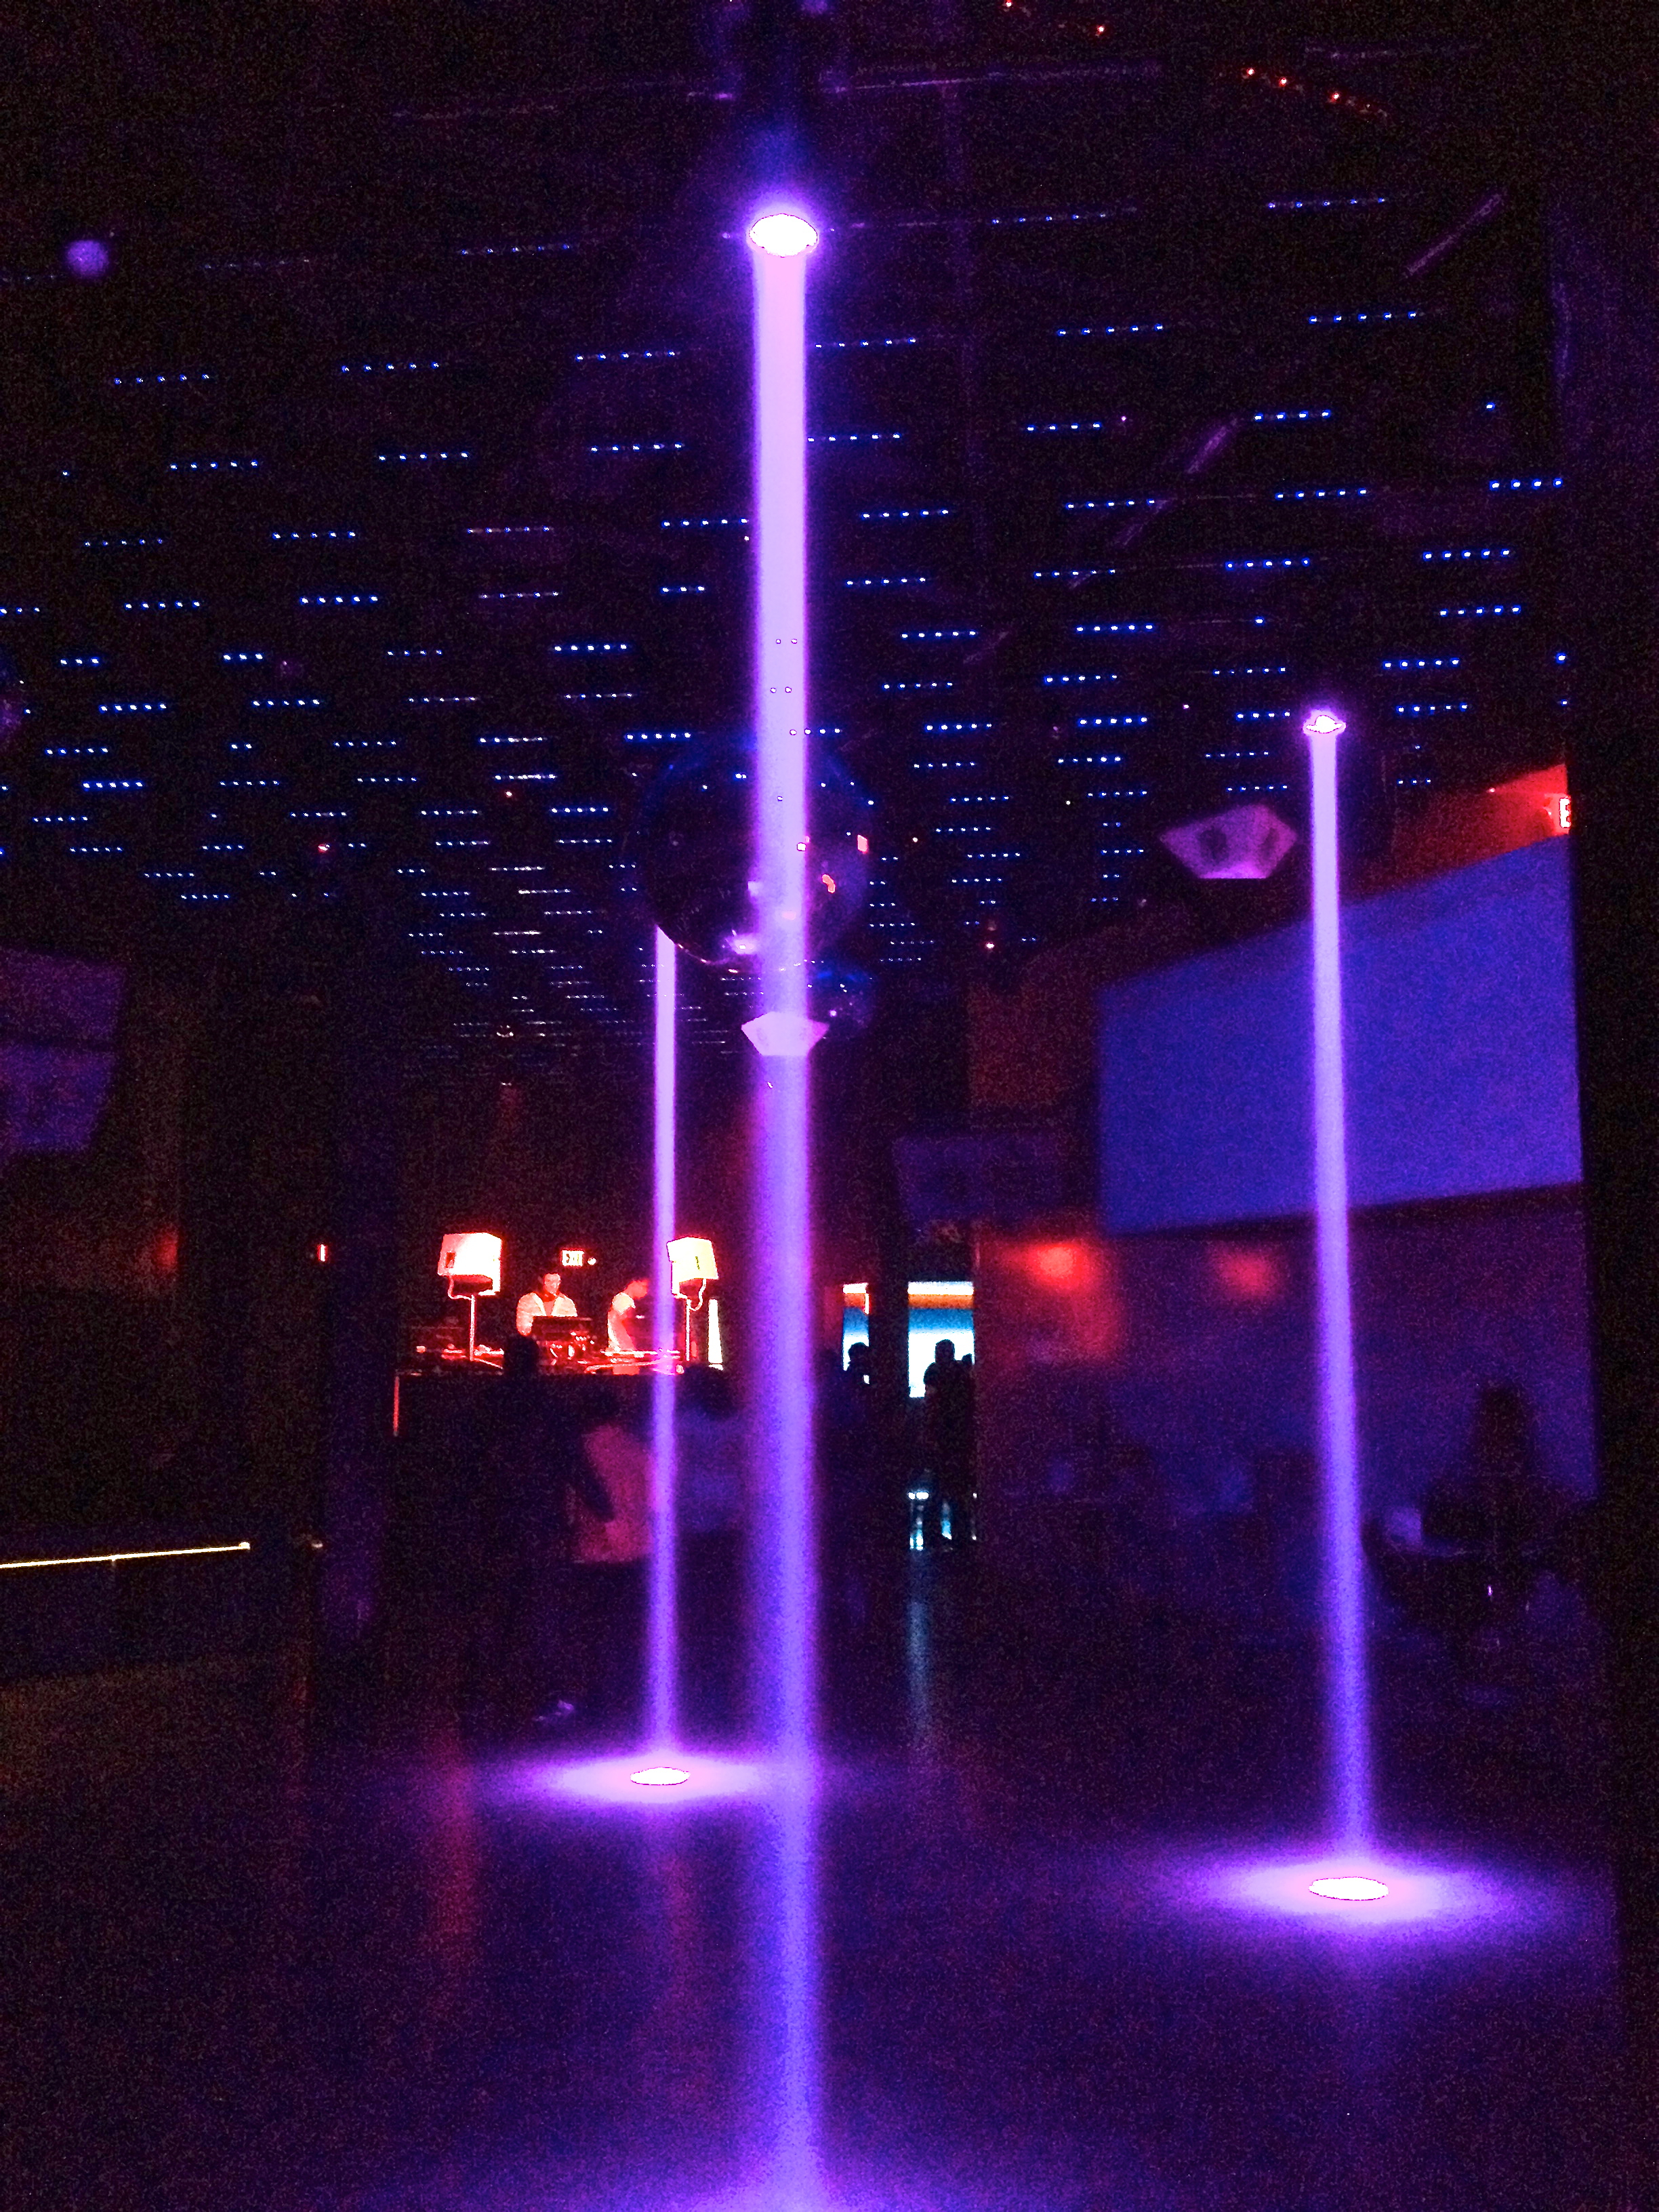 Q Nightclub